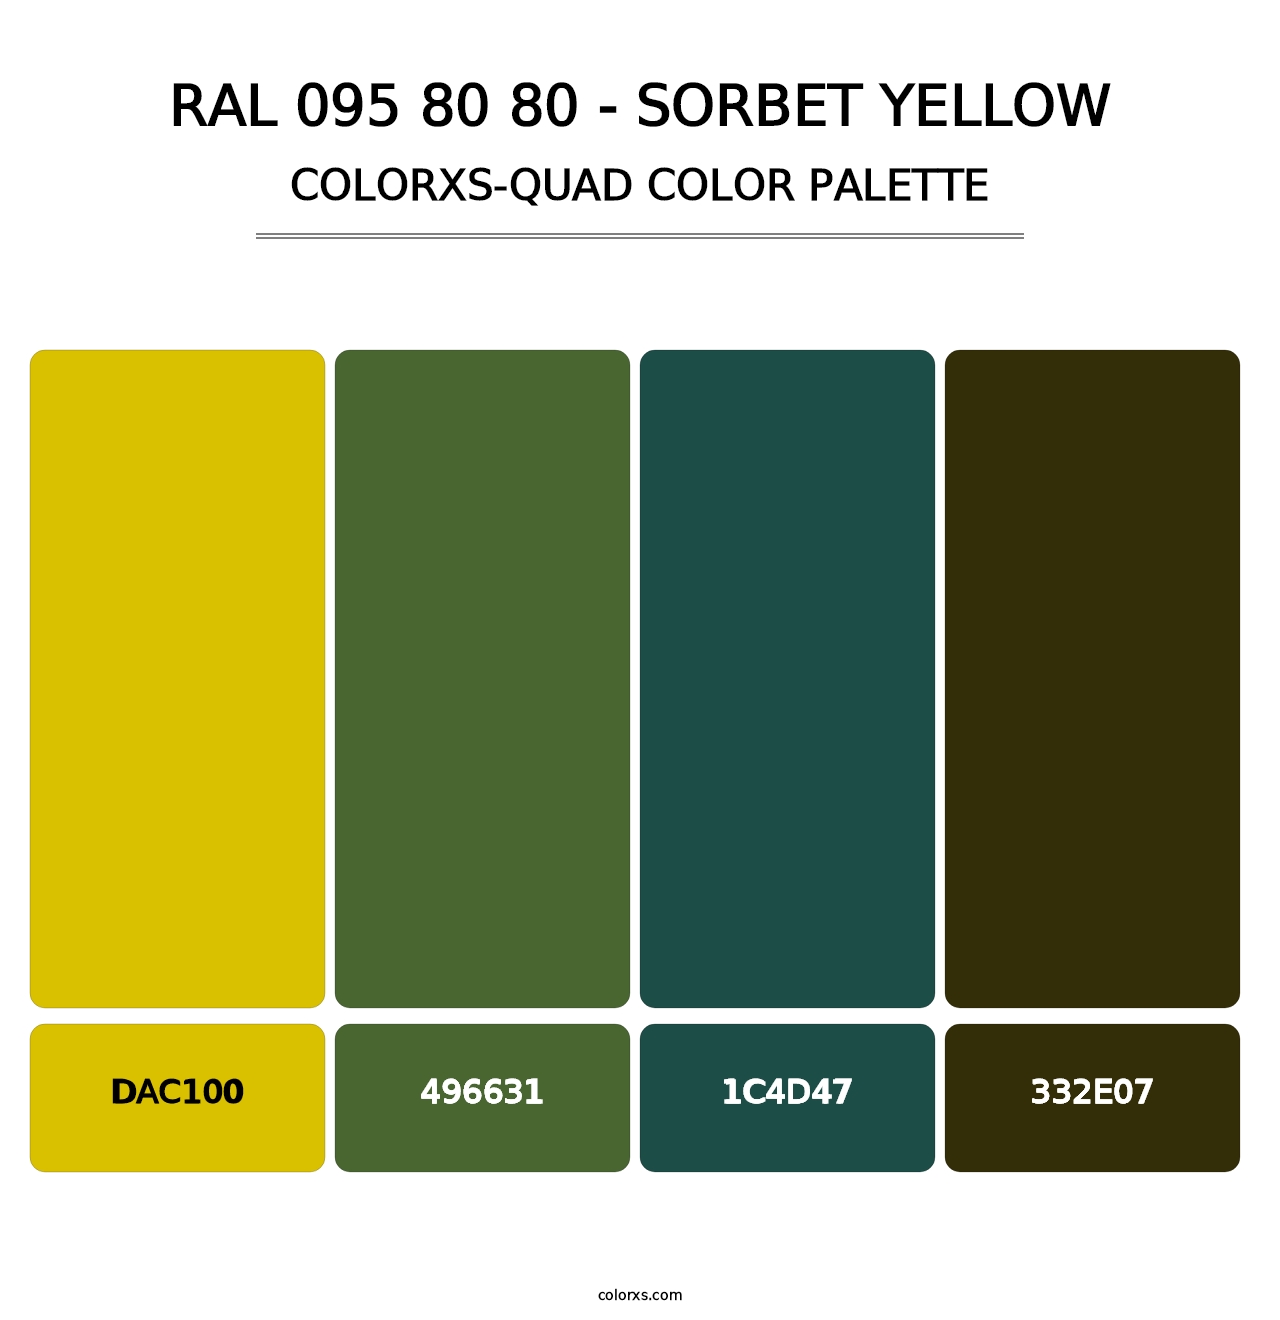 RAL 095 80 80 - Sorbet Yellow - Colorxs Quad Palette